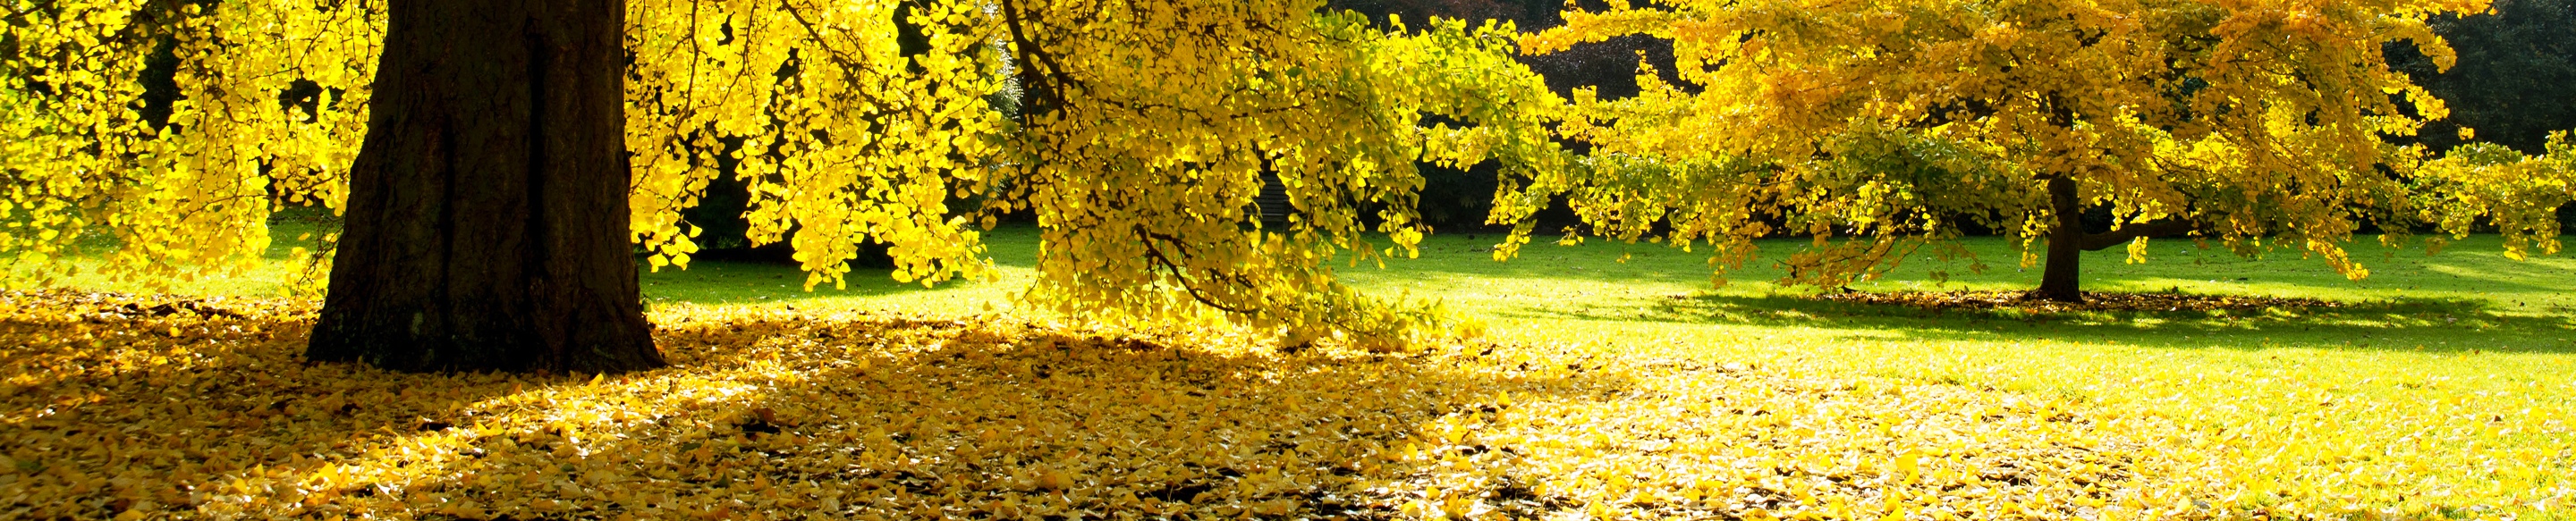 Fallen yellow autumn leaves at Kew